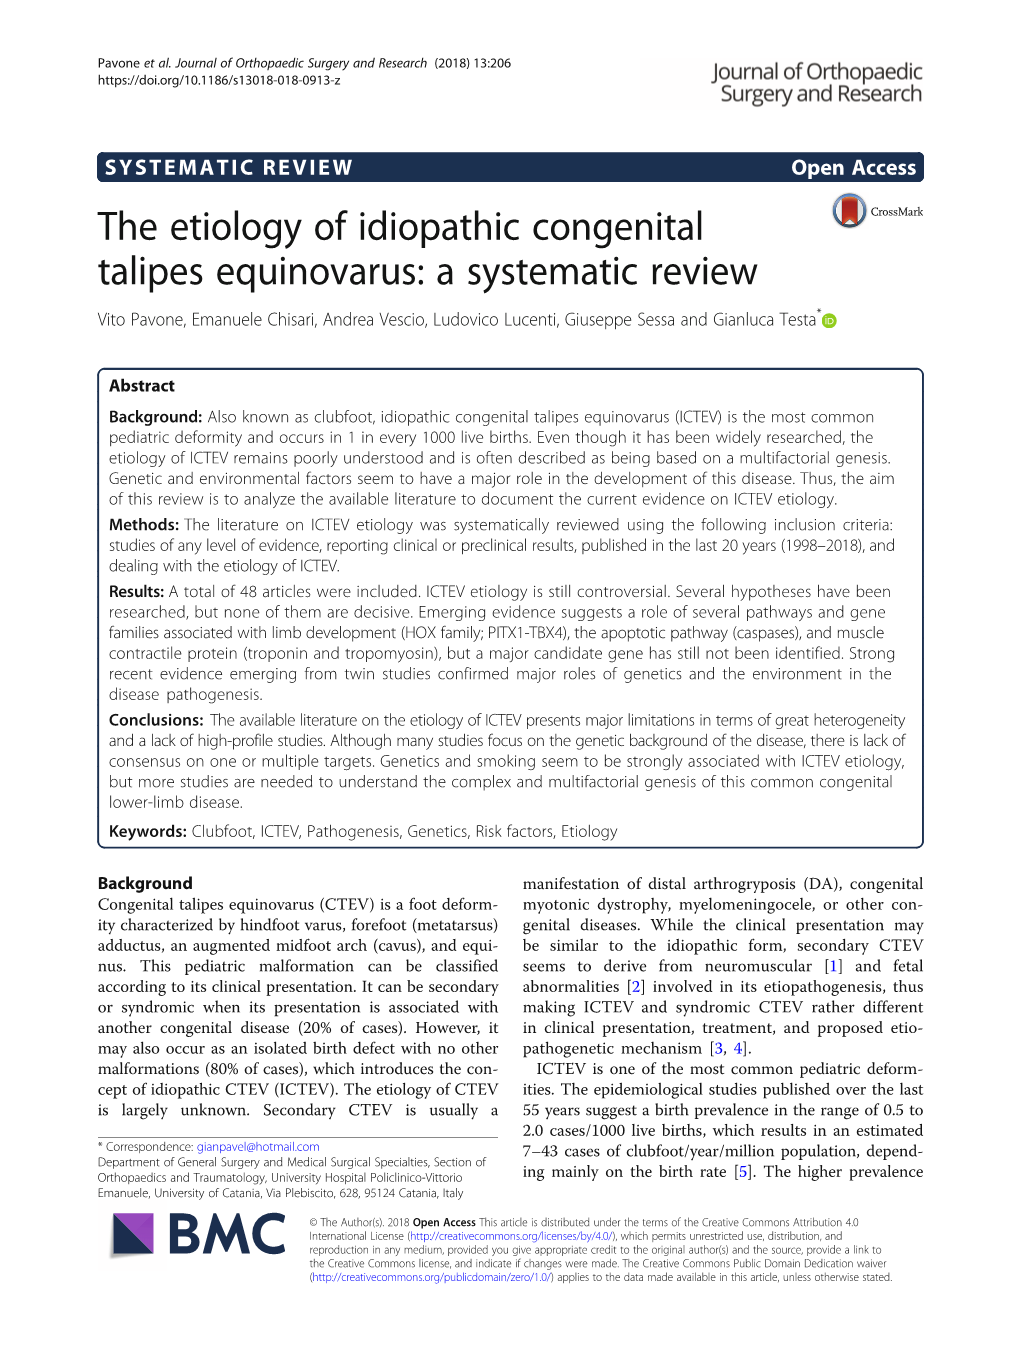 The Etiology of Idiopathic Congenital Talipes Equinovarus